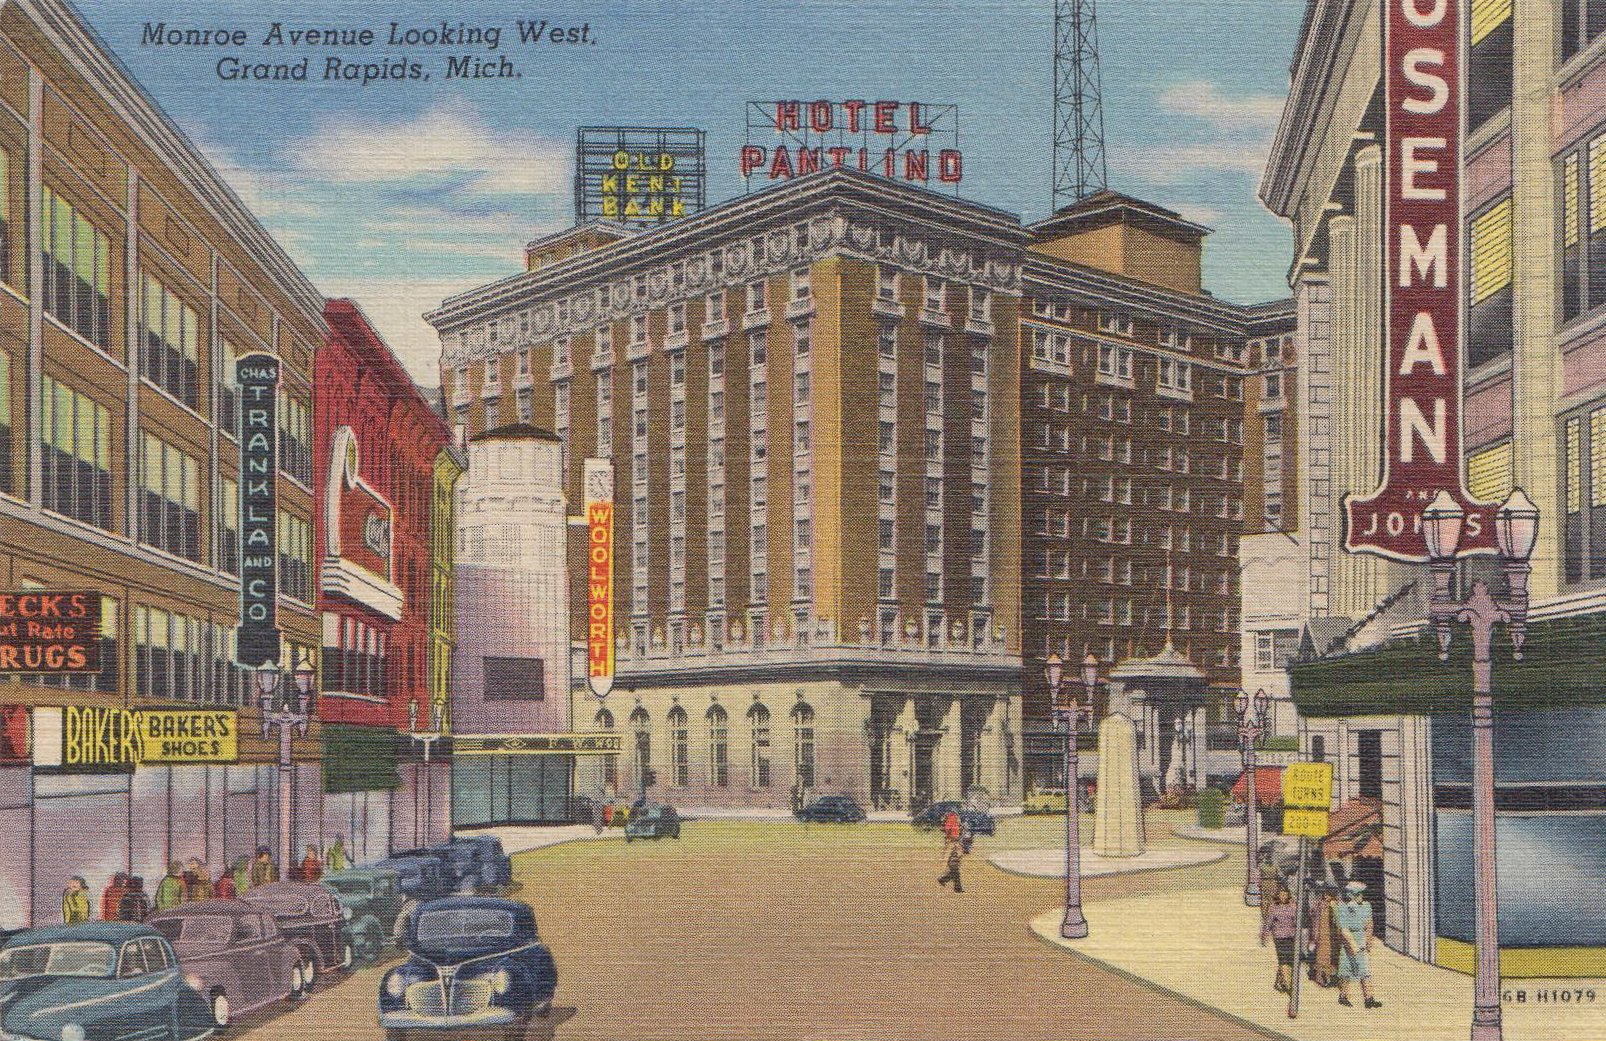 Monroe Avenue looking West, Grand Rapids, MI – circa 1950